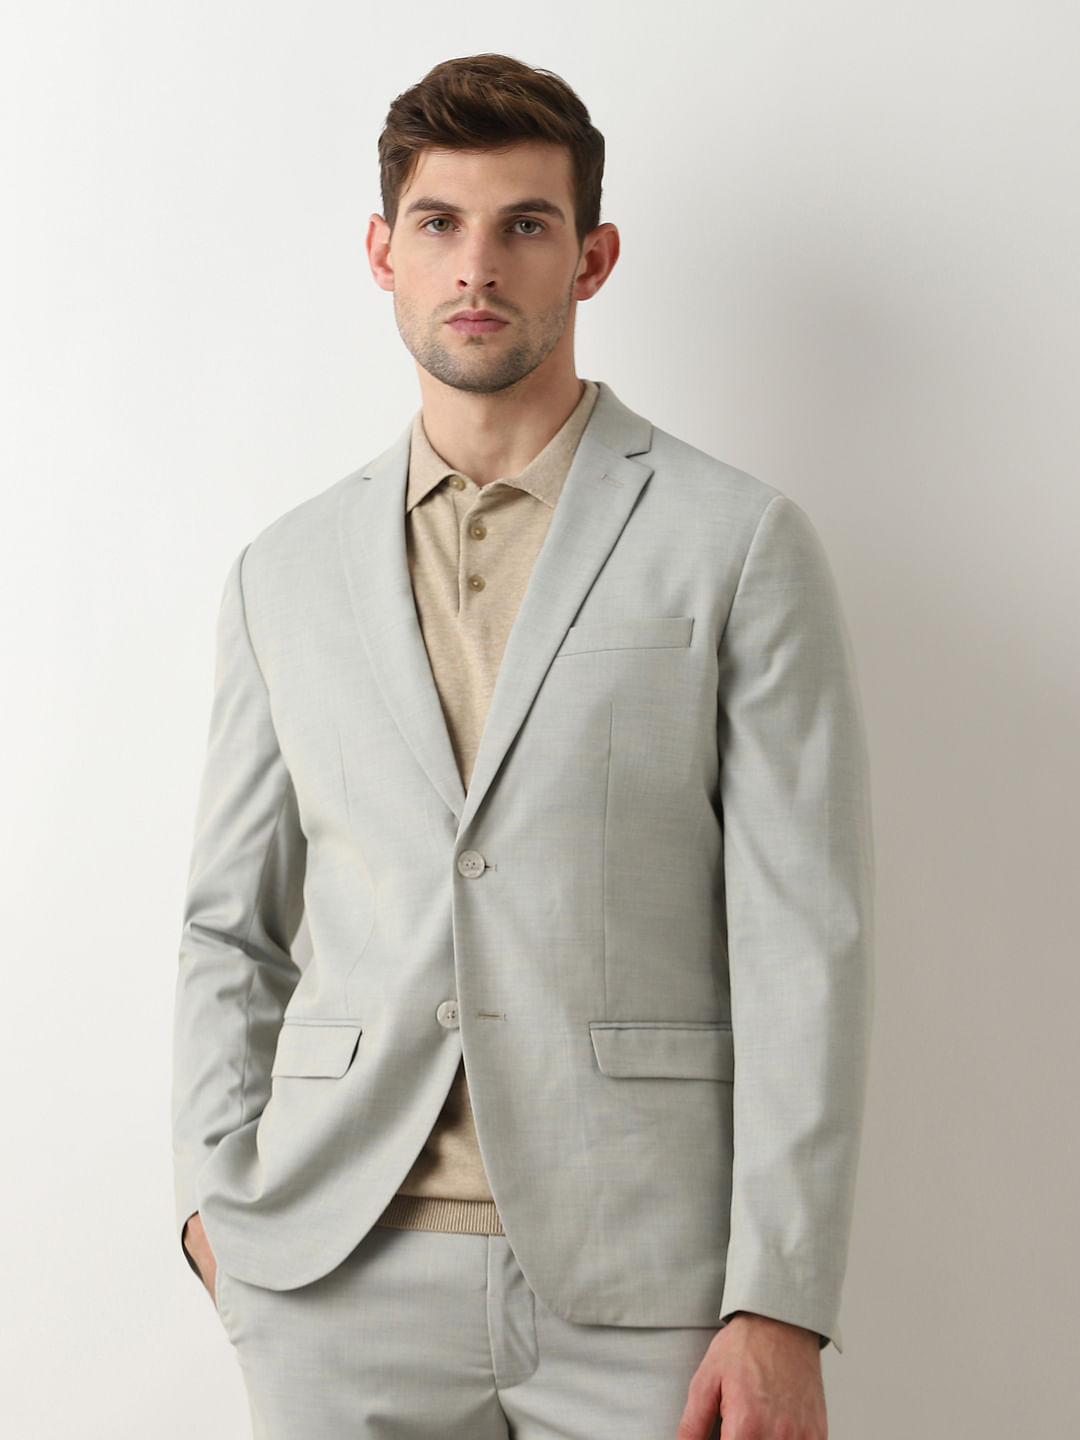 Black Blazer with white Shirt & Grey trouser For Men ⋆ Best Fashion Blog  For Men - TheUnstitchd.com